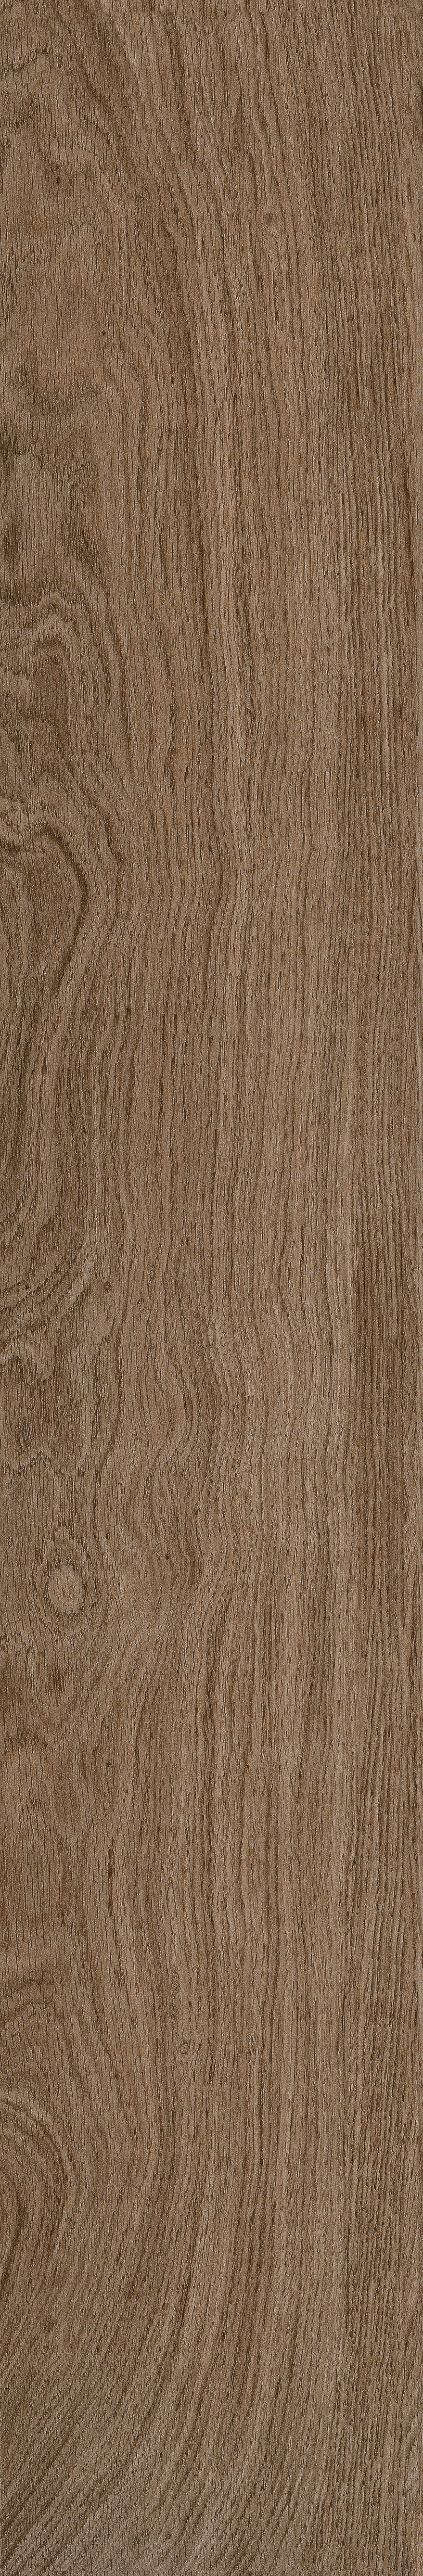 Giania 木紋磚 Bm122504m